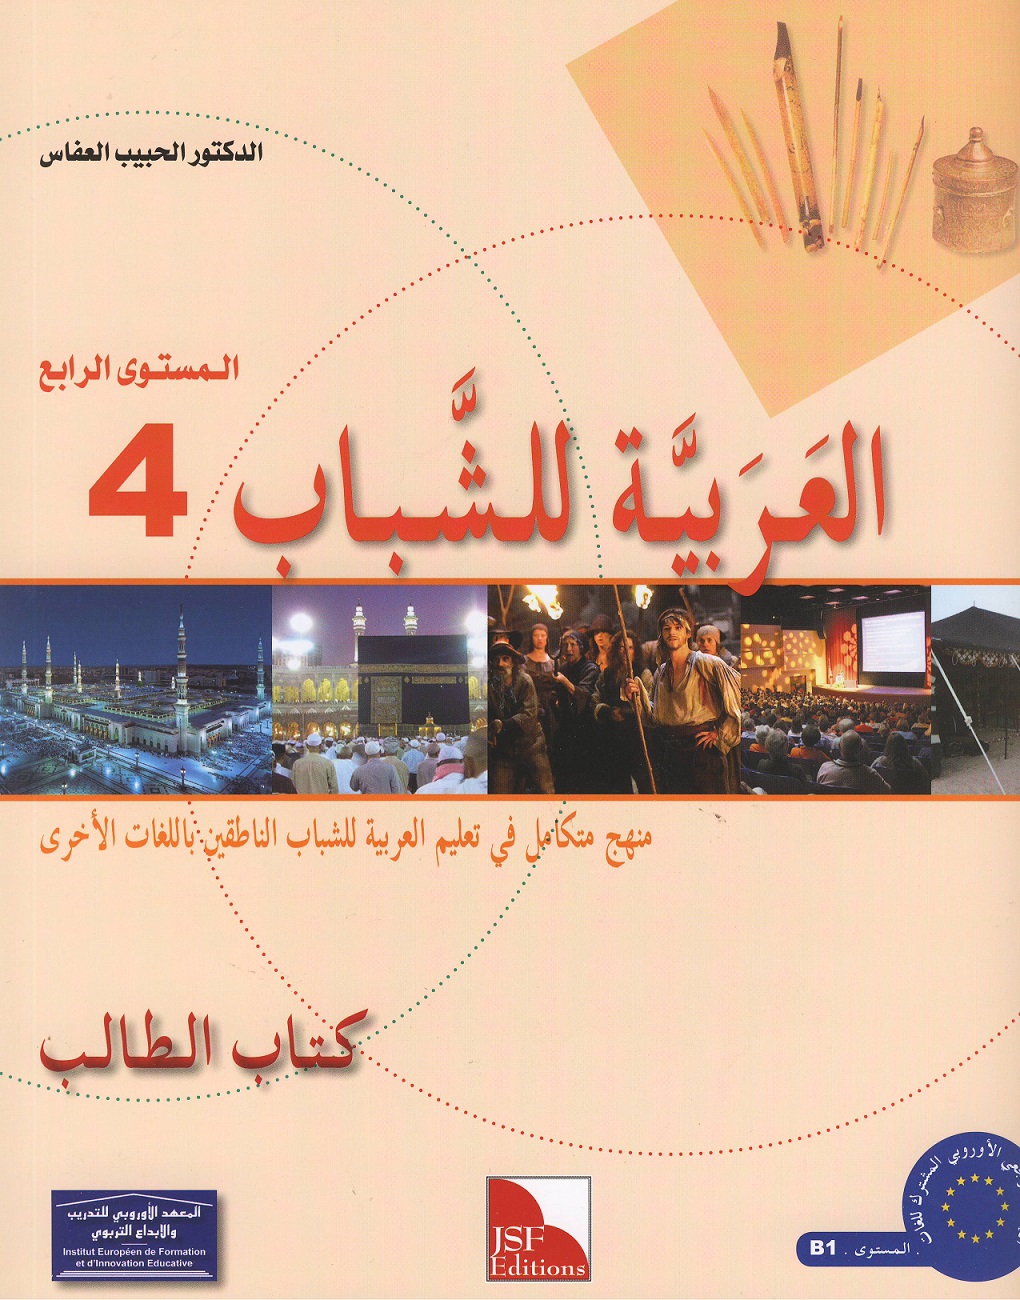 Arabisch für junge Erwachsene 4te Stufe العربية للشباب